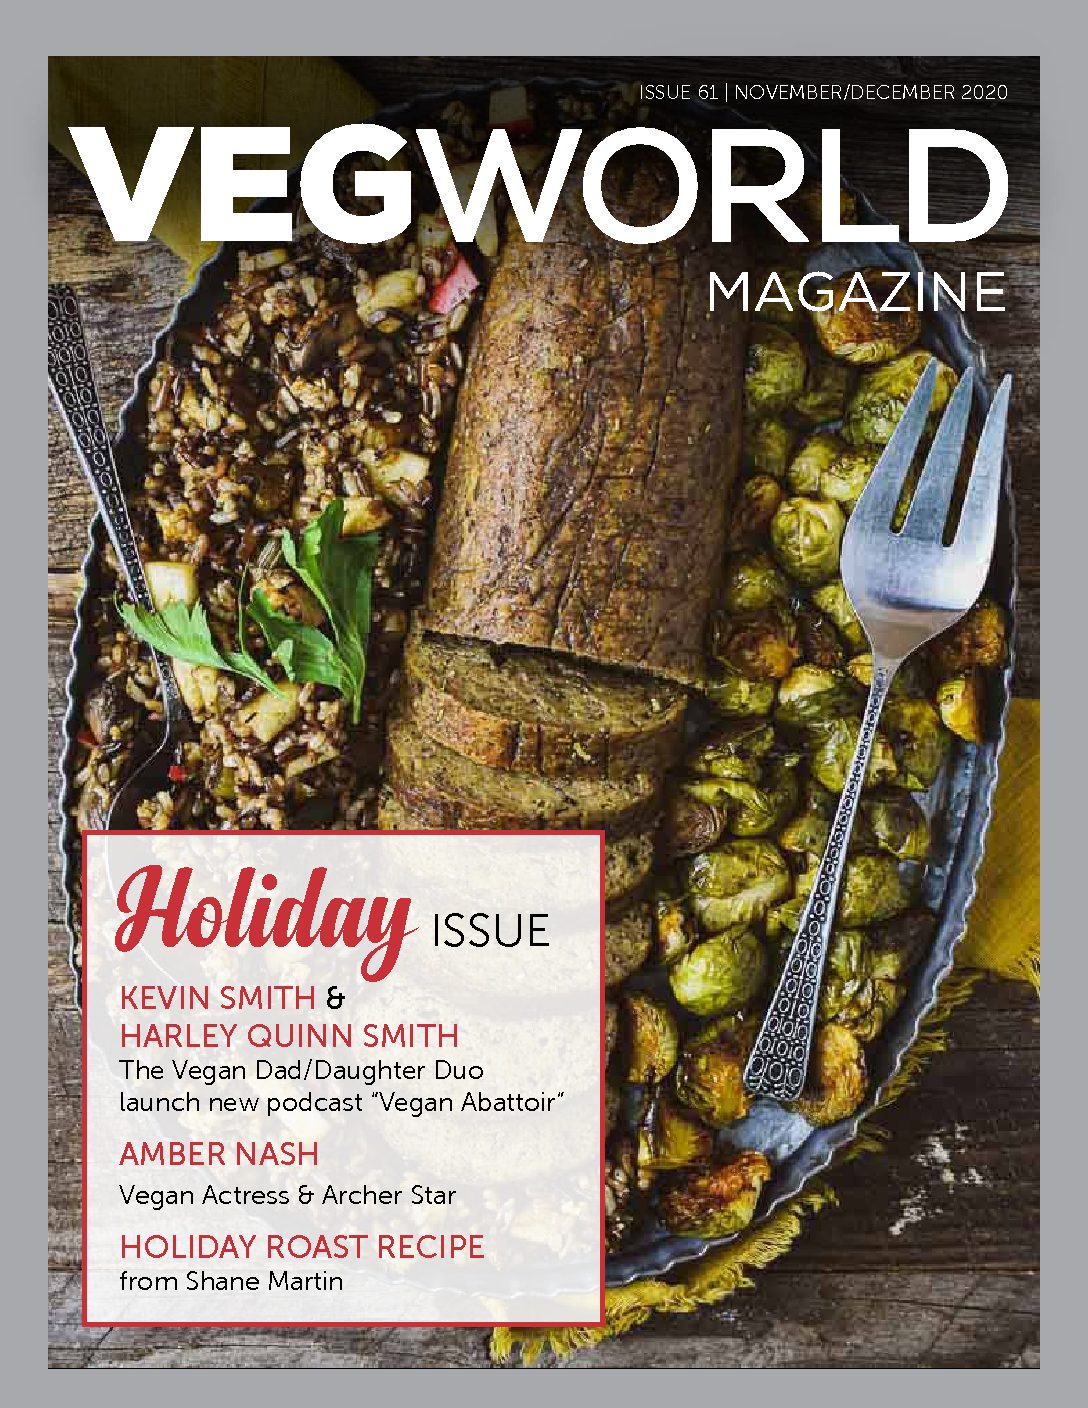 The Holiday Issue • VEGWORLD 61